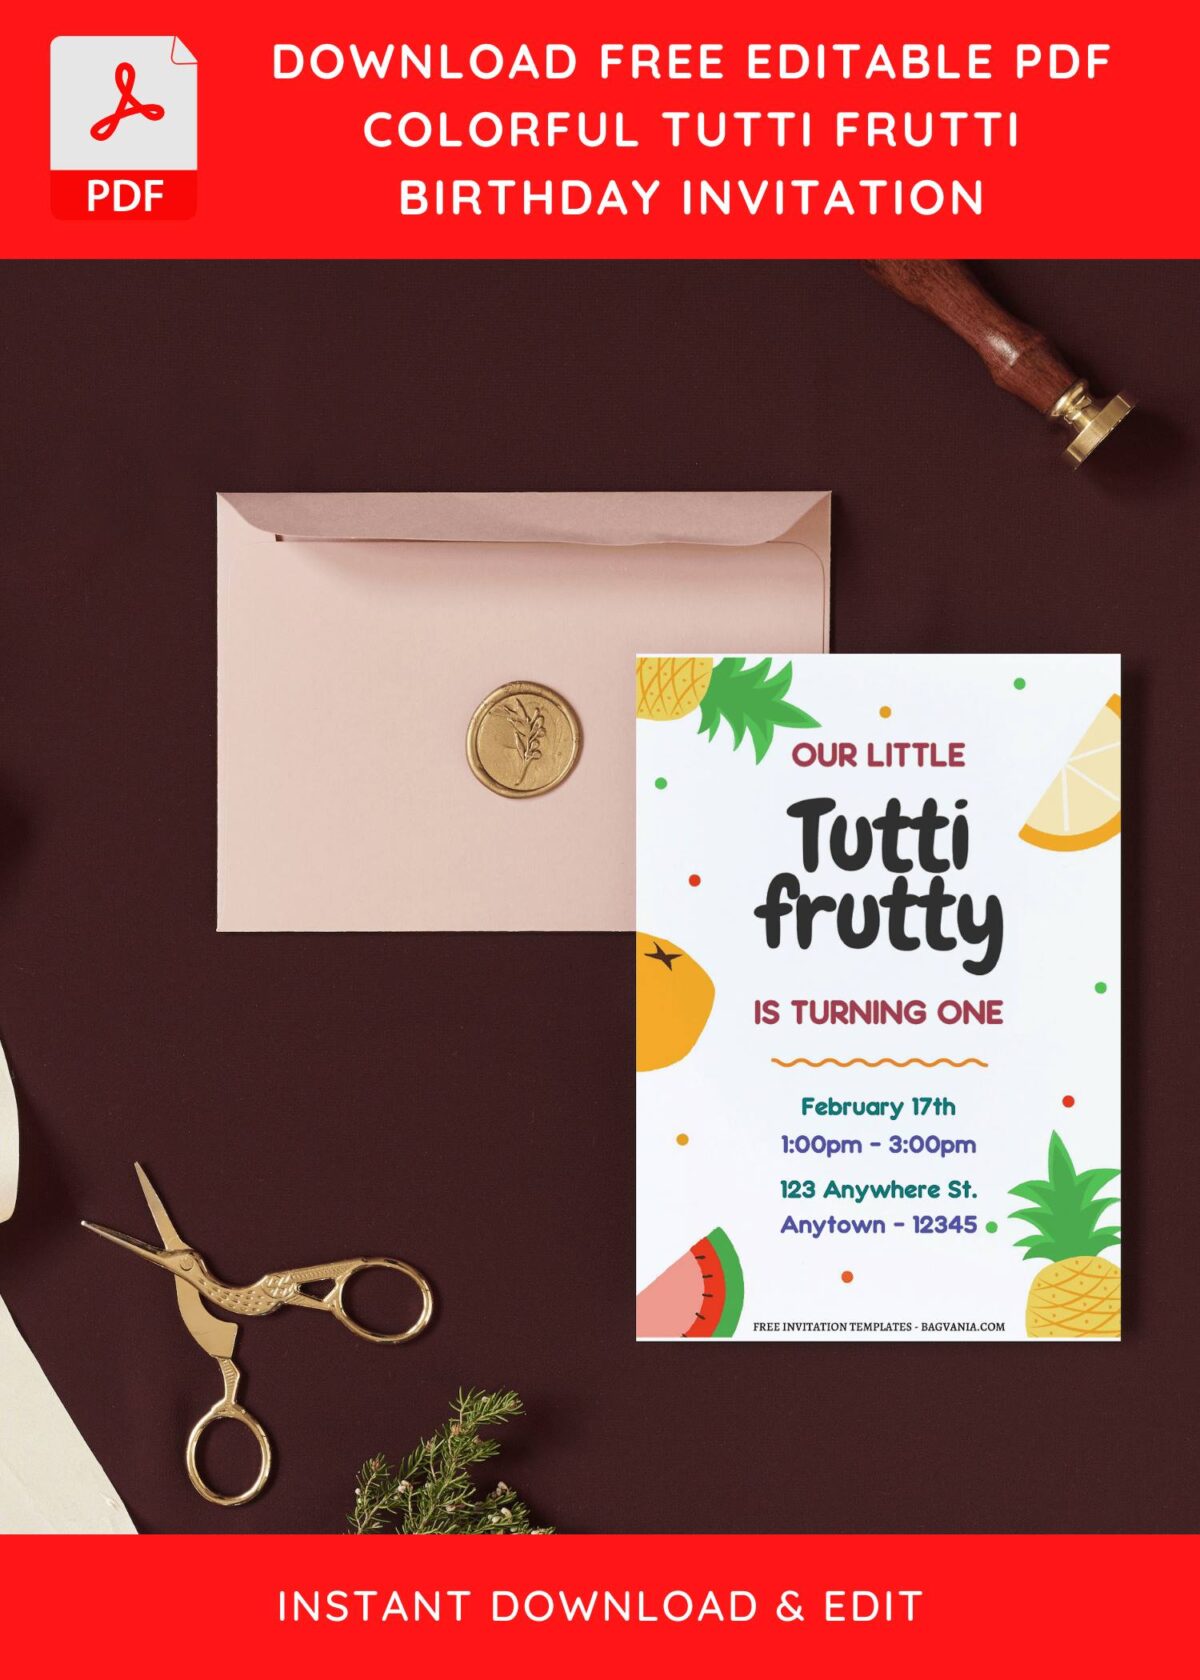 (Free Editable PDF) Fun Tutti Frutti Birthday Invitation Templates I